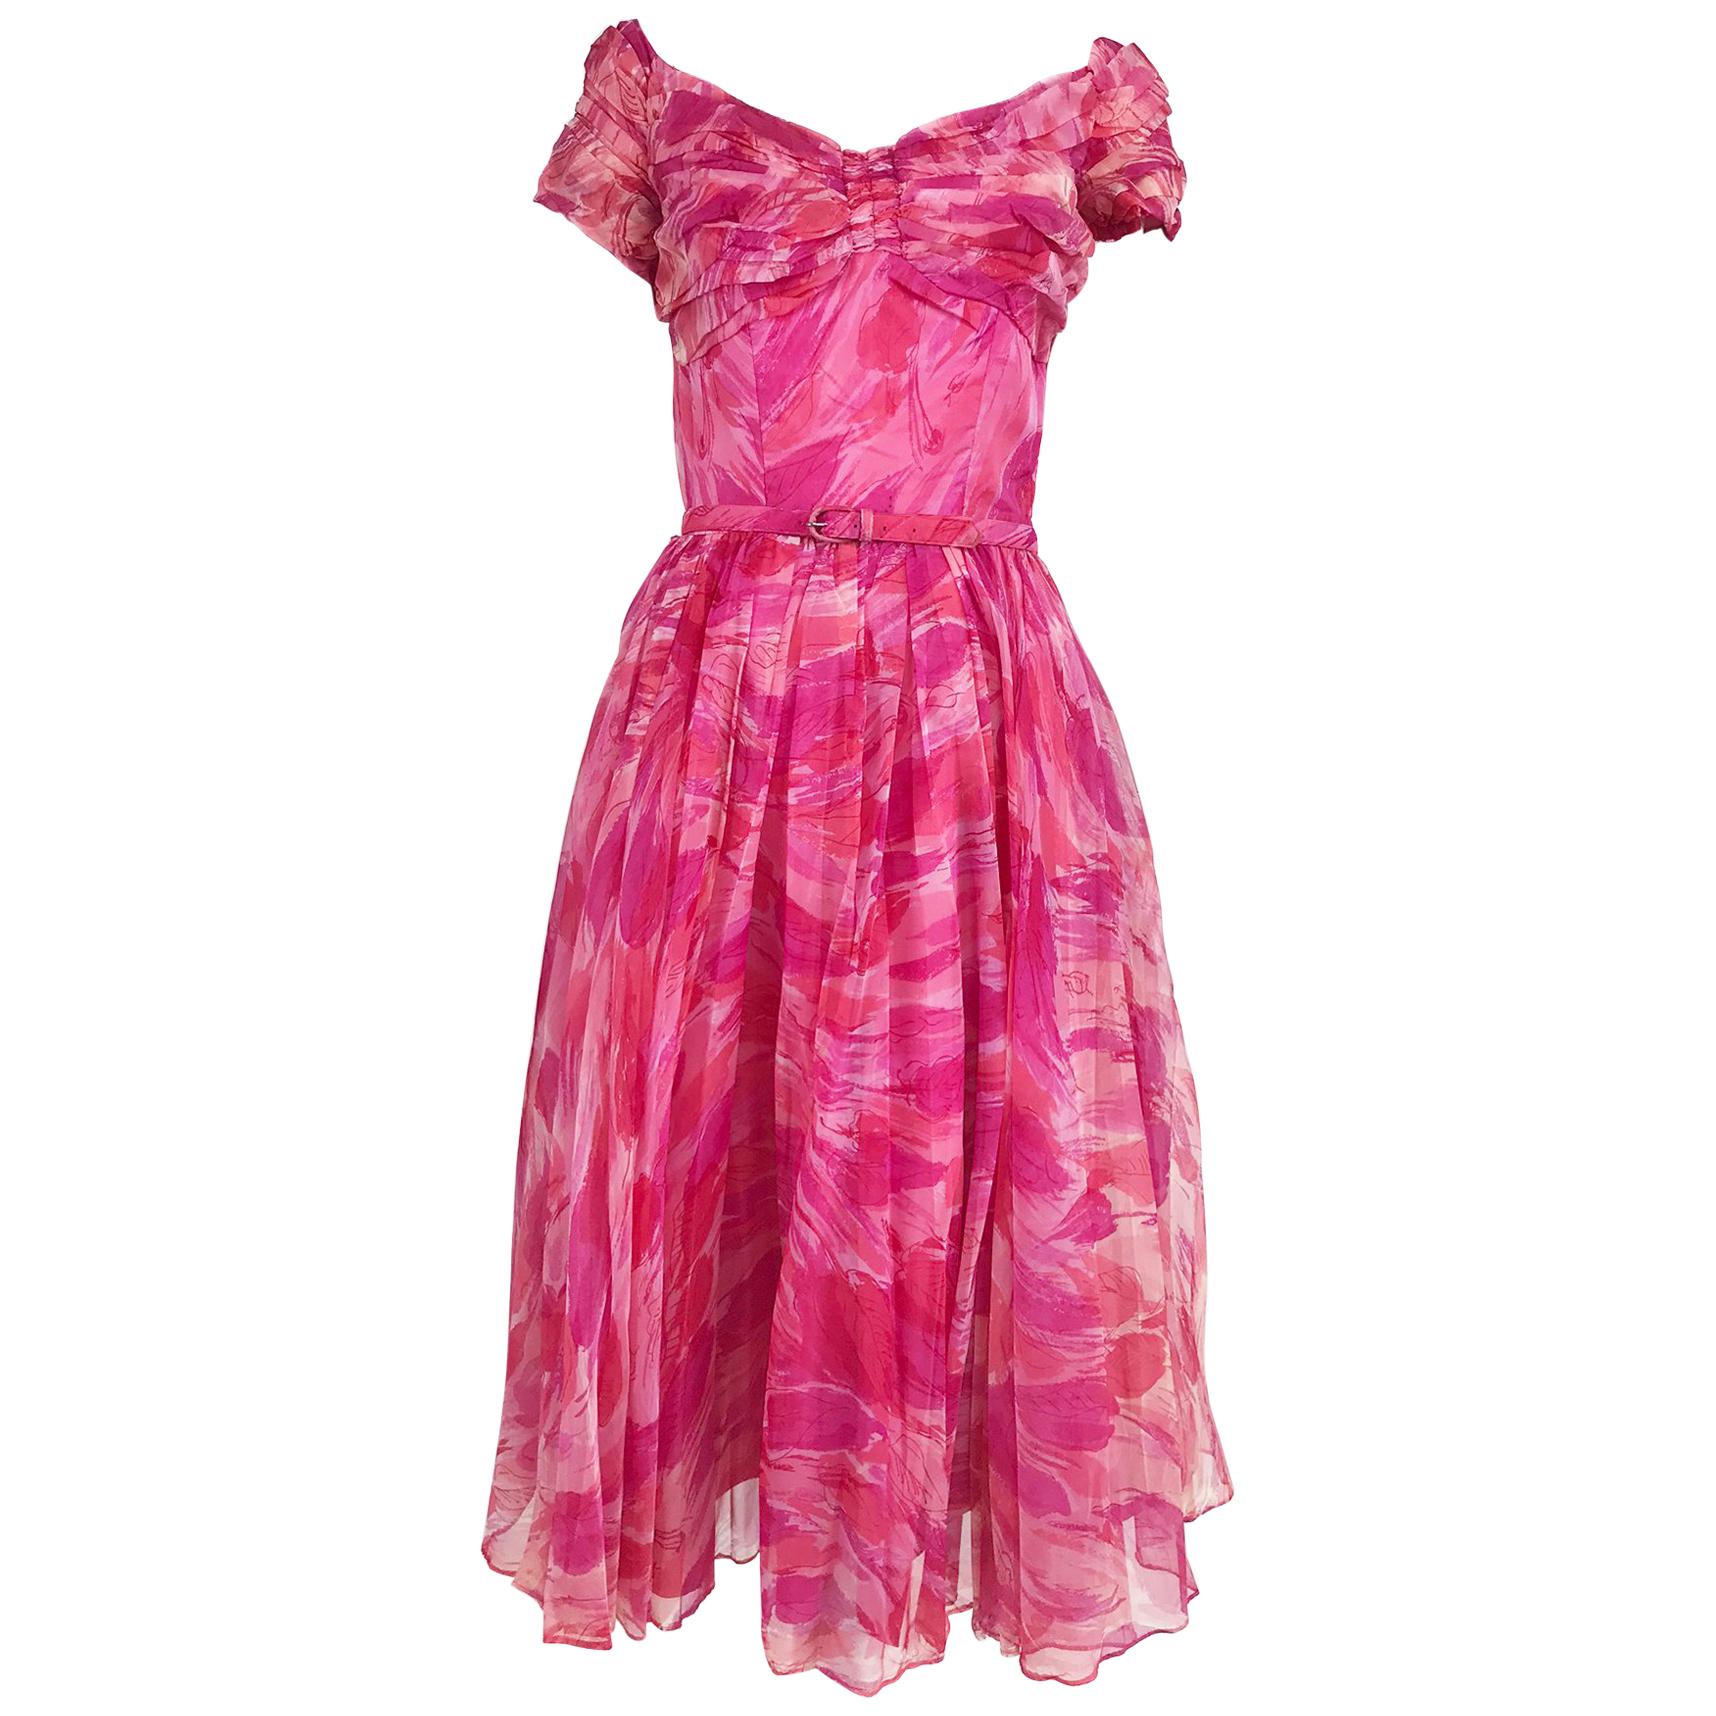 Hot pink modernist floral print off the shoulder early 1960s organza dress